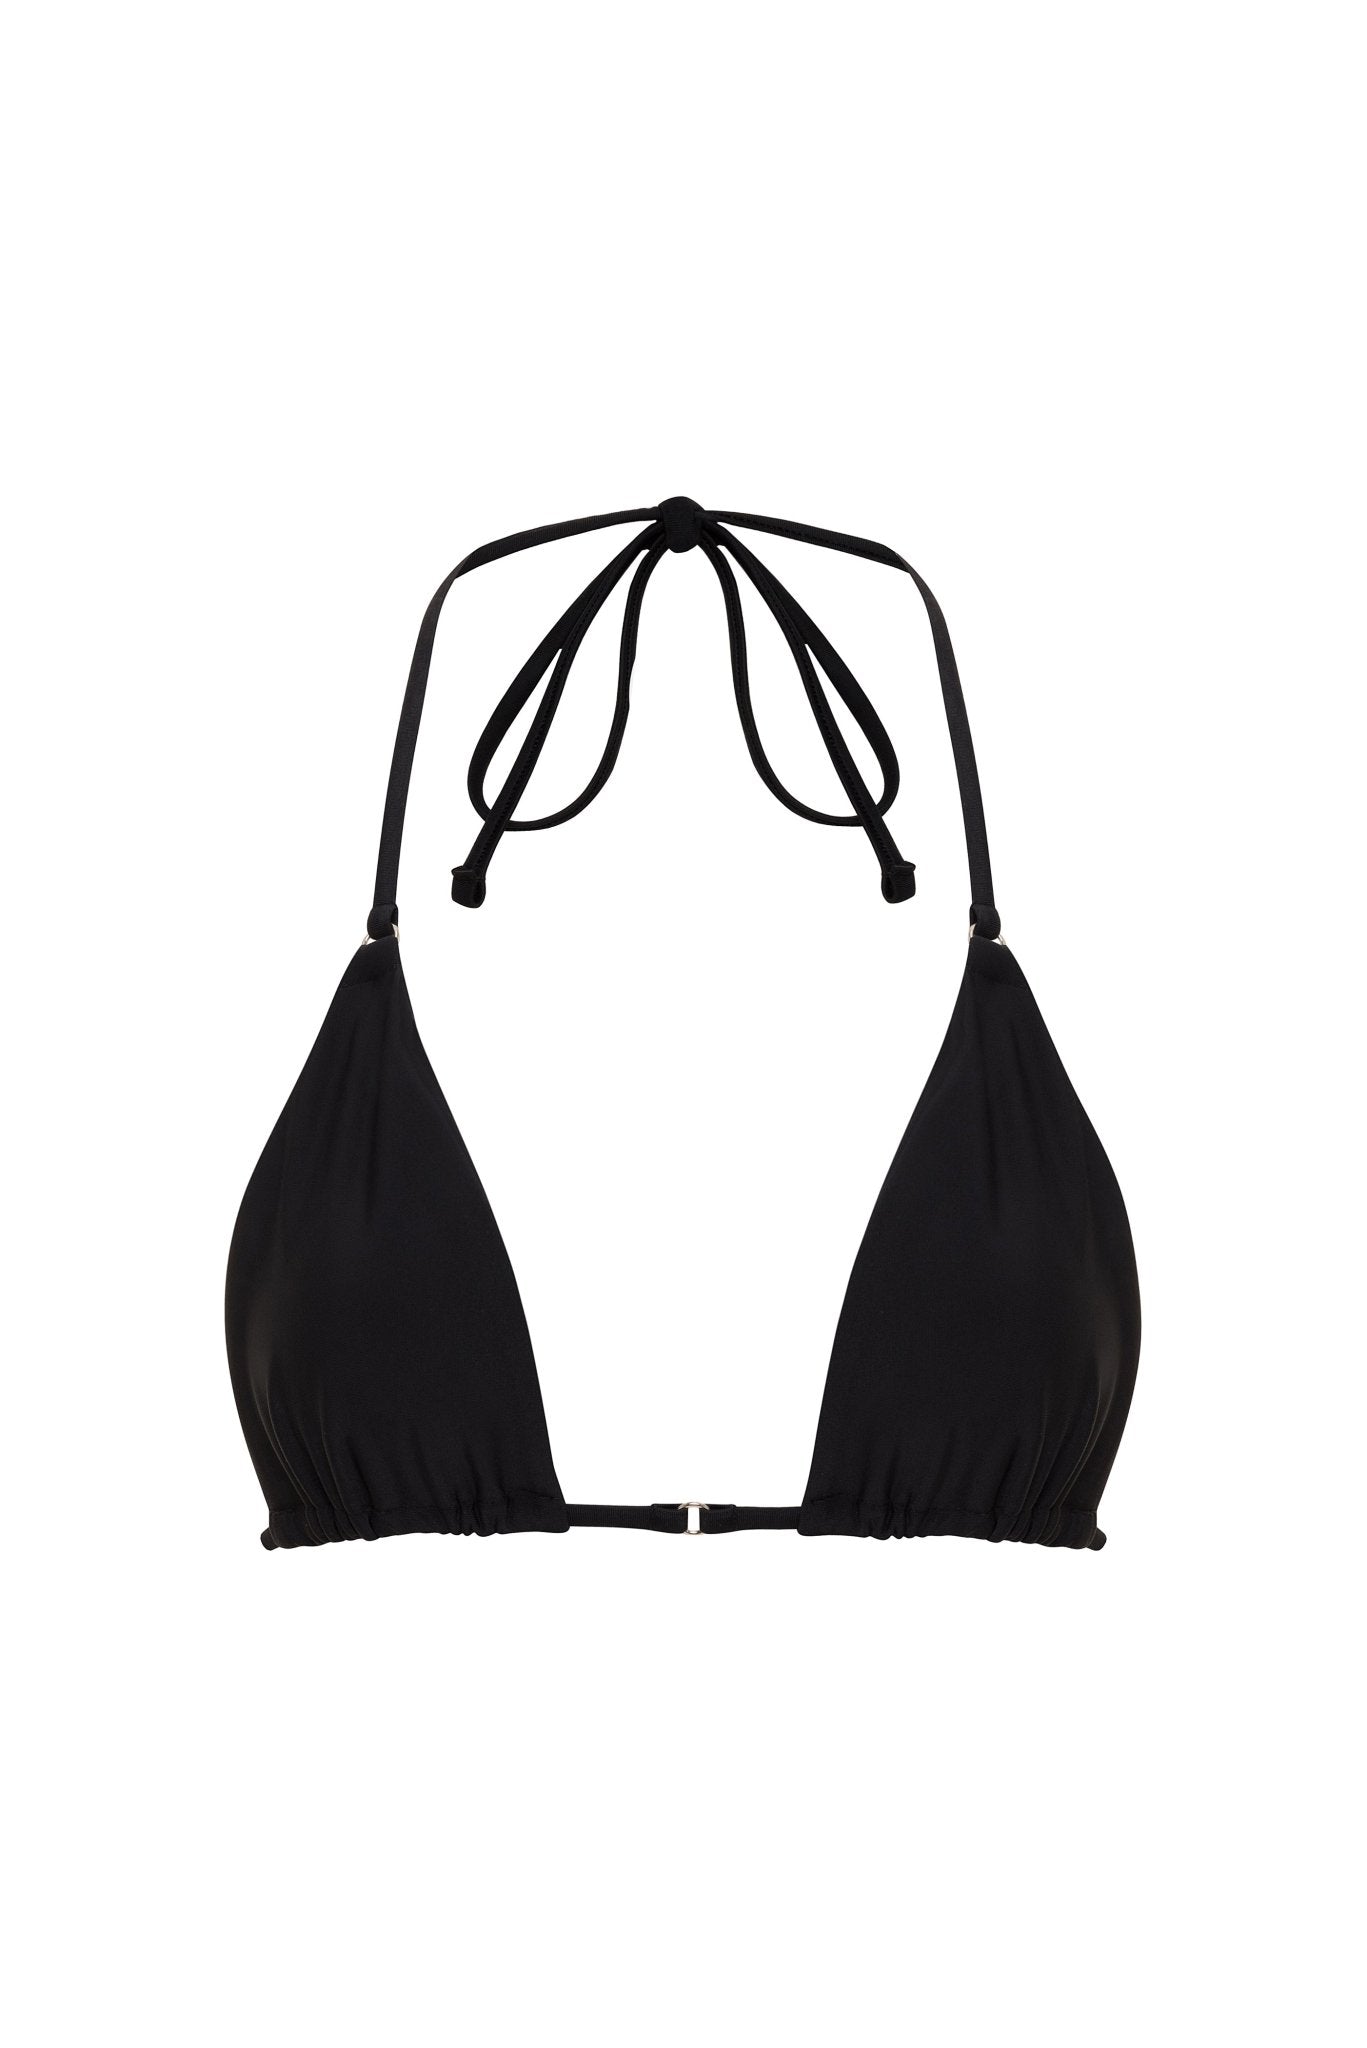 Valencia Triangle | Black Bikini Set – YG COLLECTION